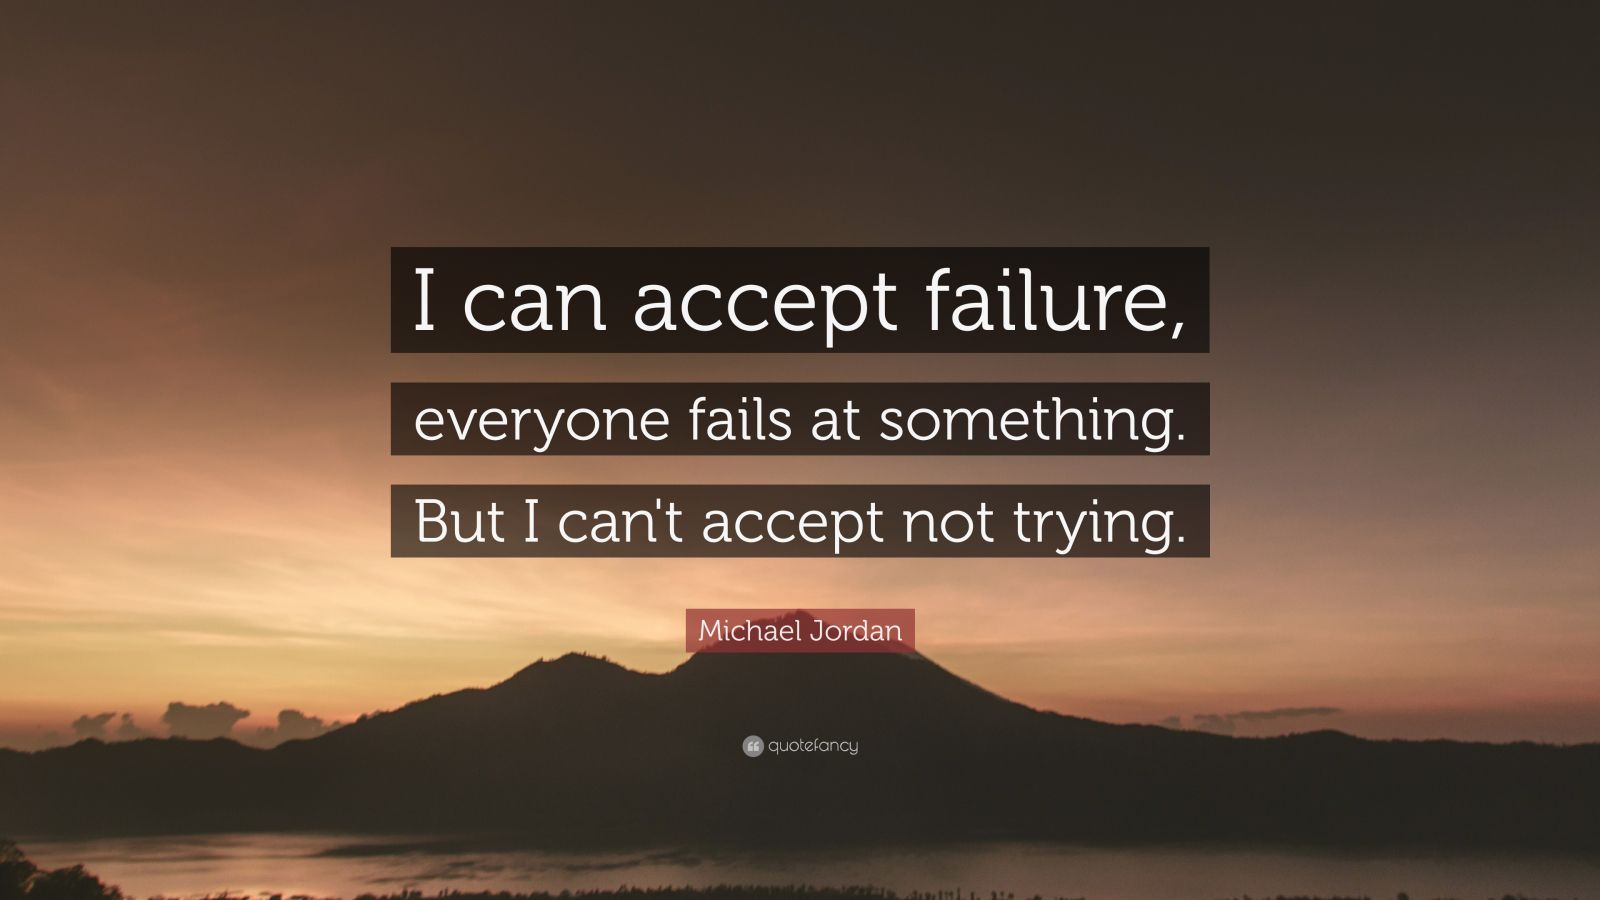 Michael Jordan Quote: “I can accept failure, everyone fails at ...